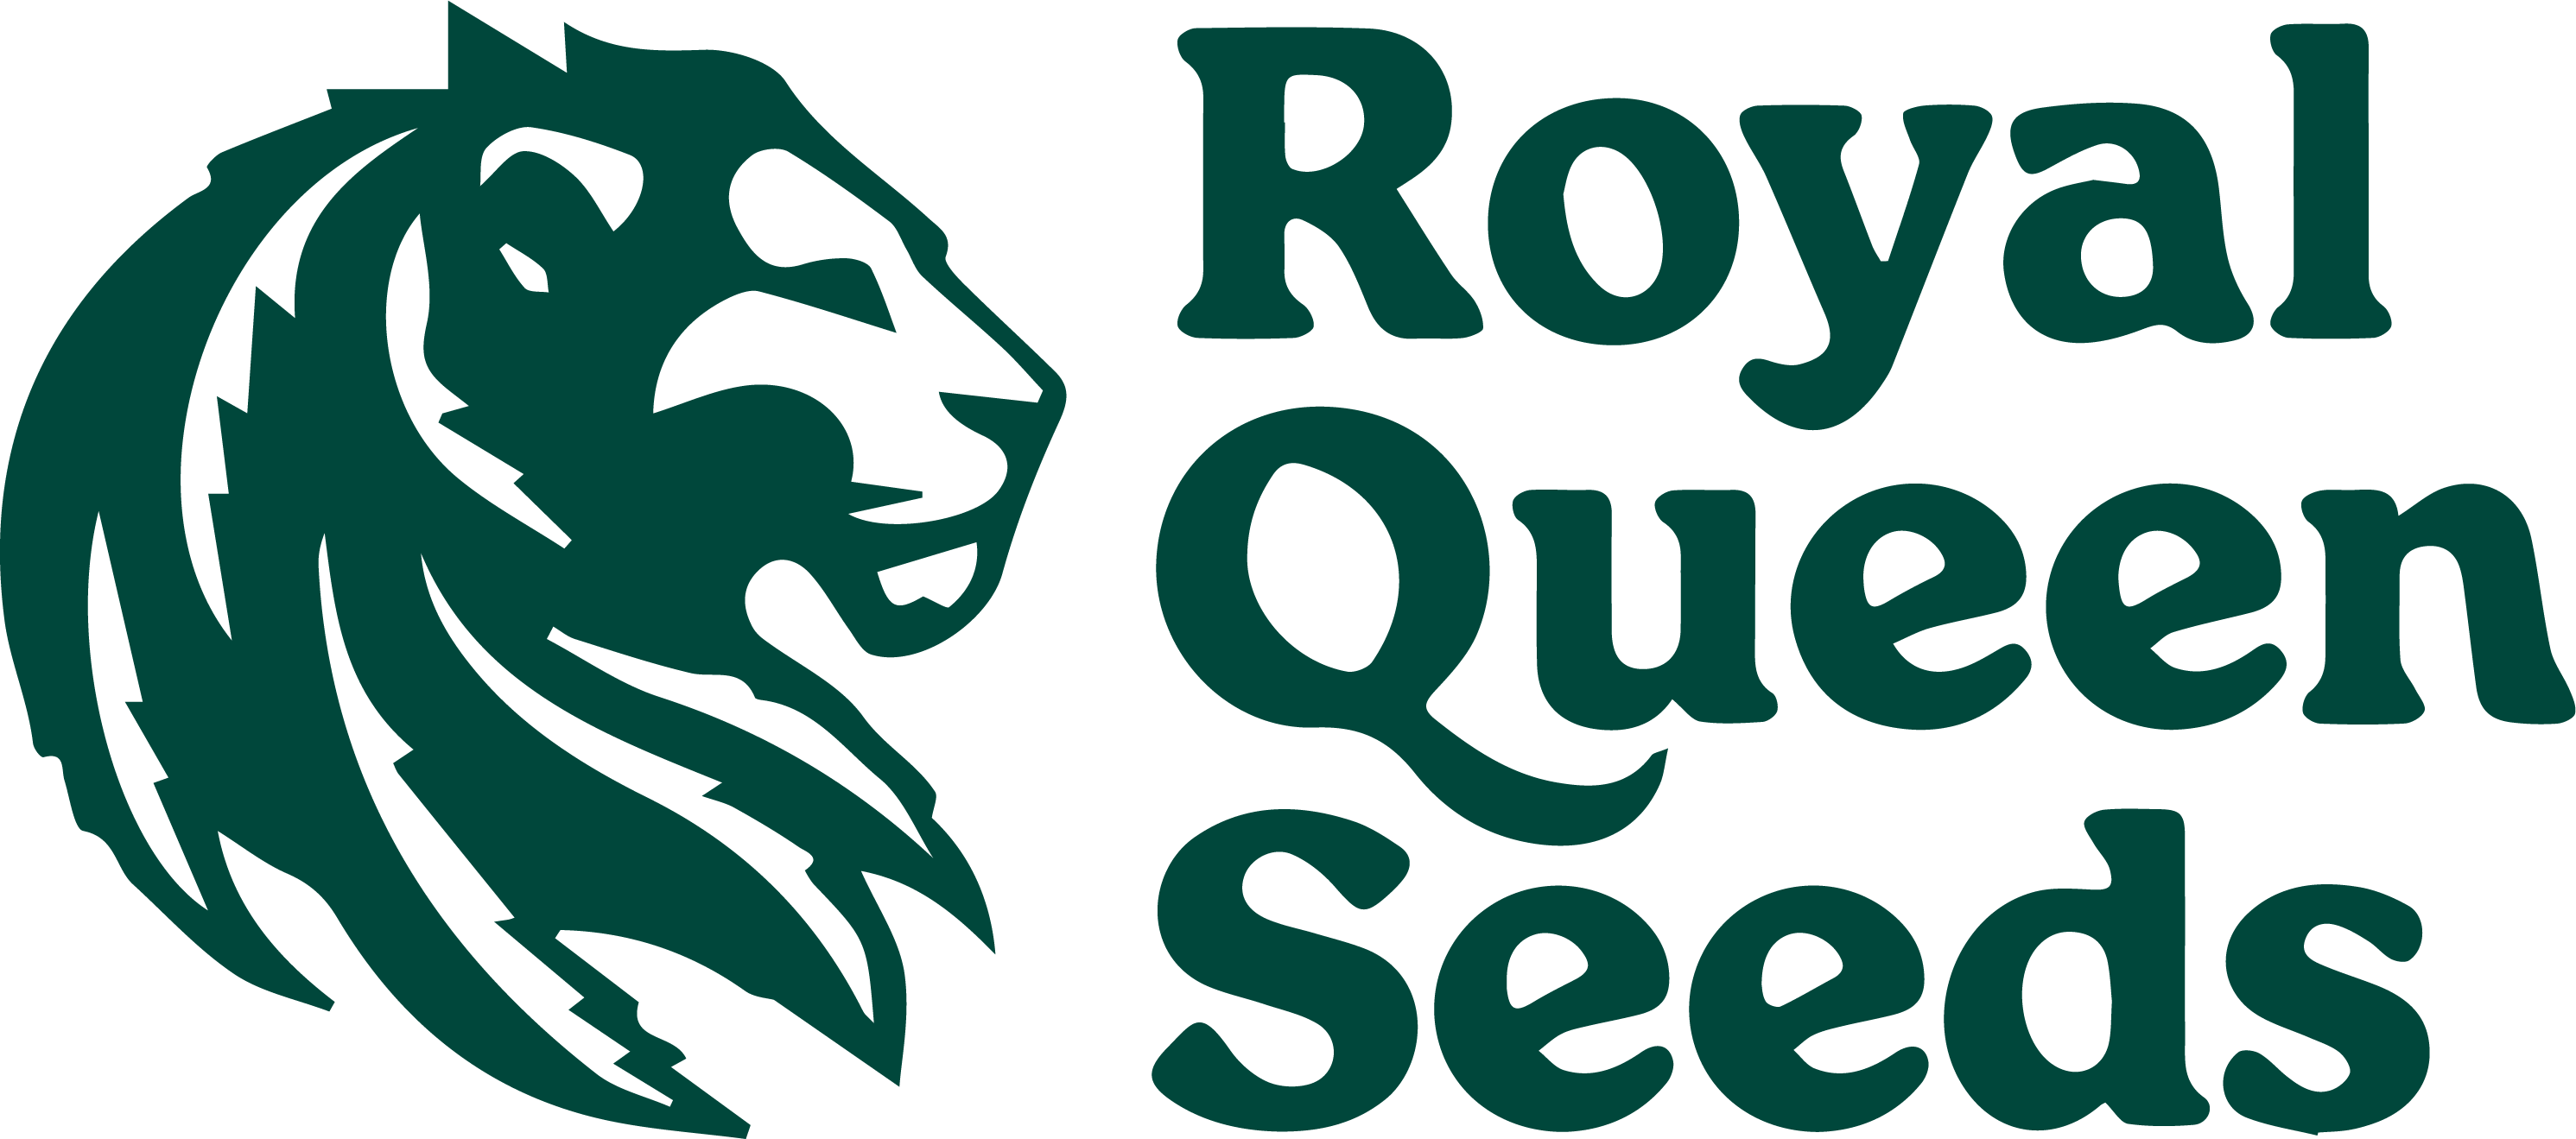 Royal Queen Seeds - Autoflower cannabis seeds - Feminized Cannabis Seeds